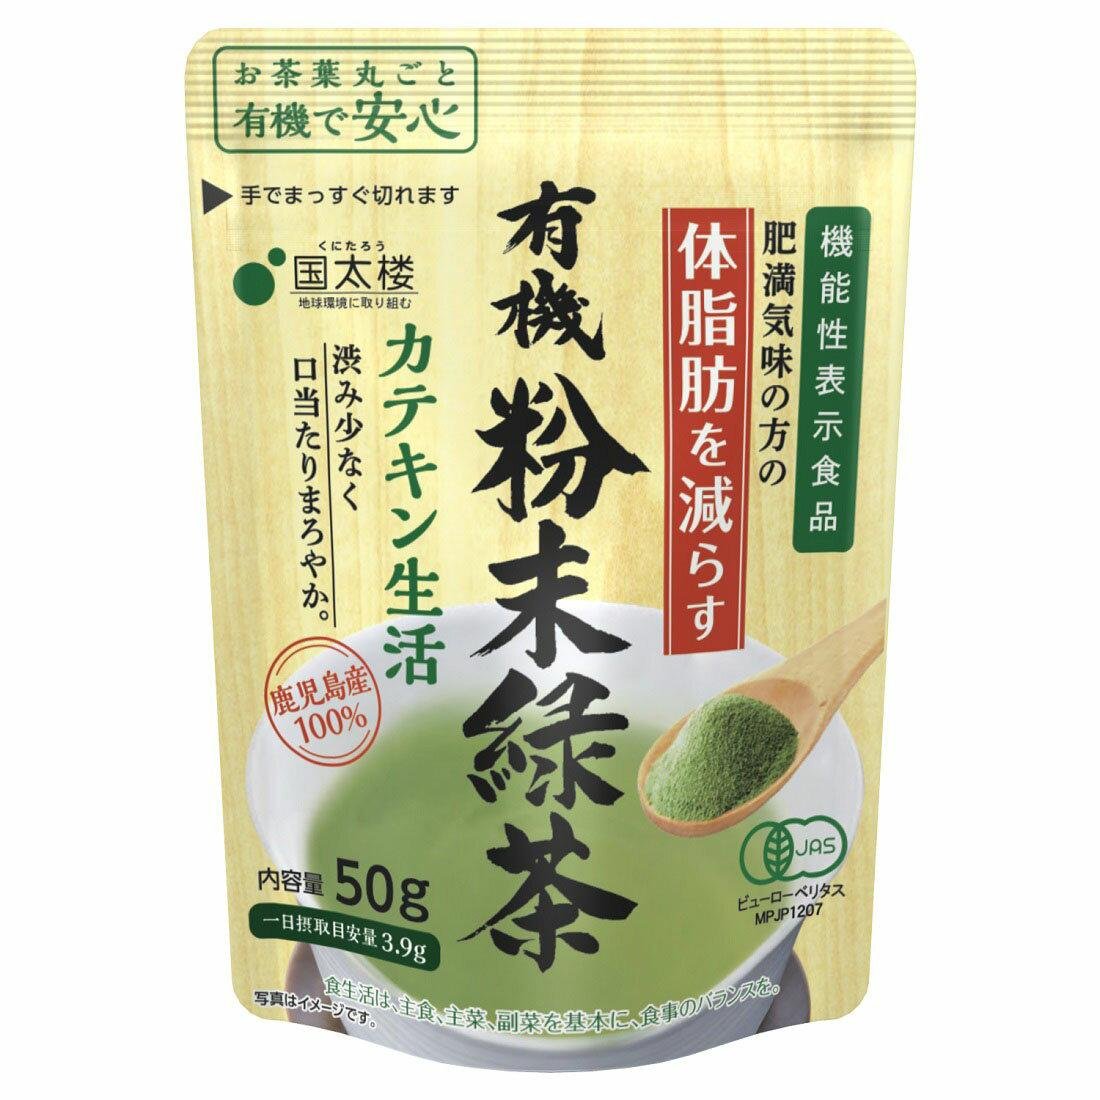 Kunitaro Organic Ryokucha Instant Japanese Green Tea Powder 50g